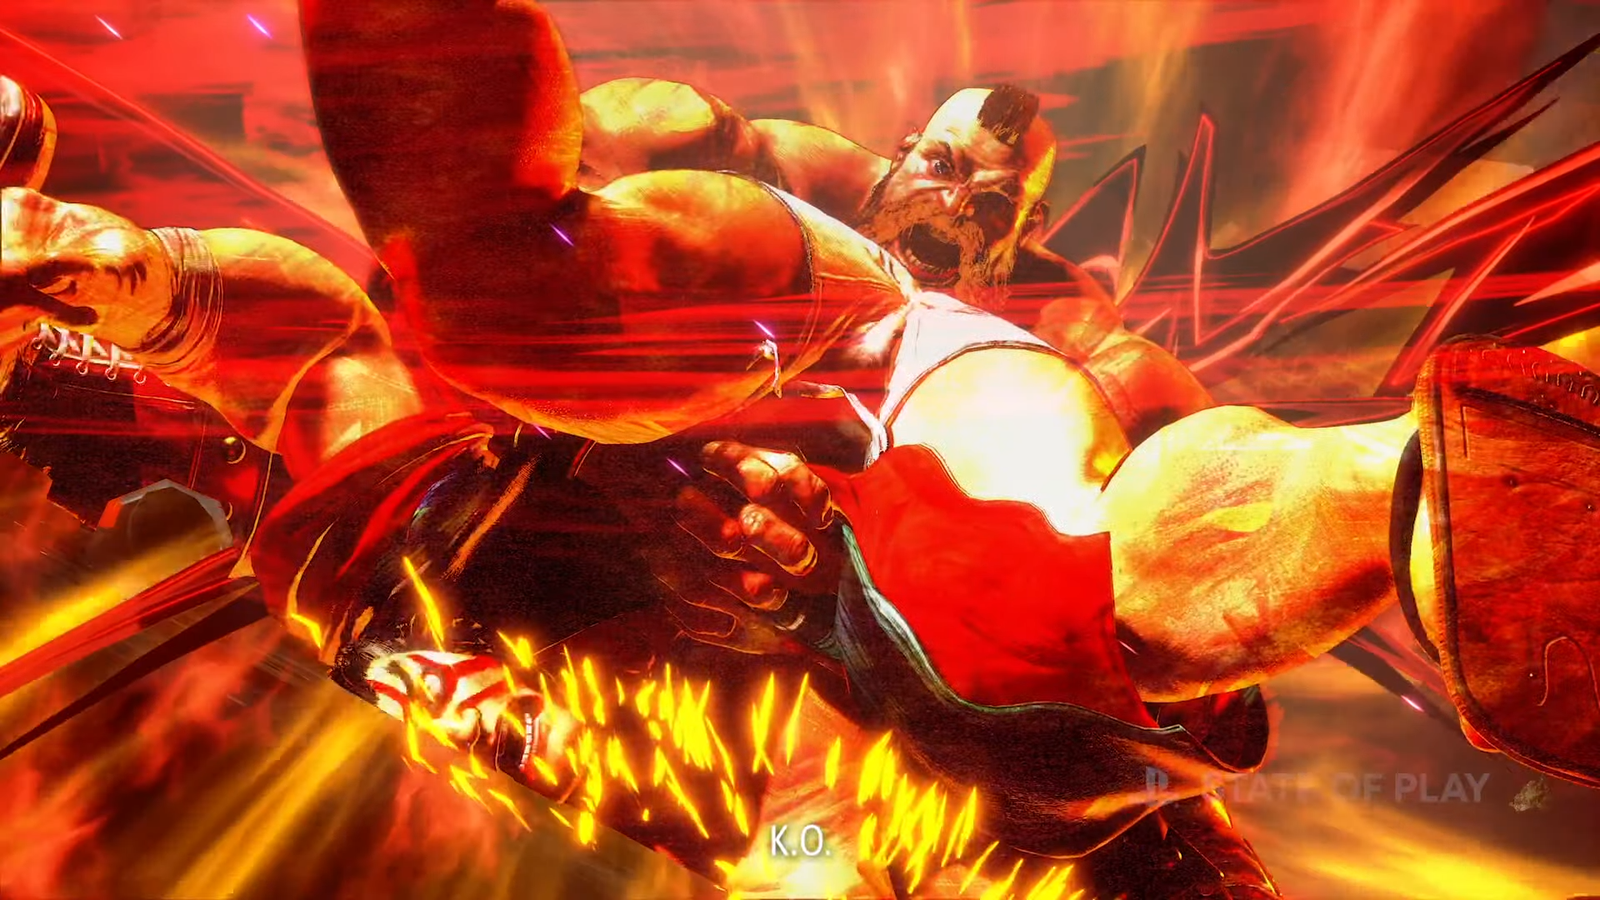 Capcom Shares New Street Fighter 6 Zangief Video Clip